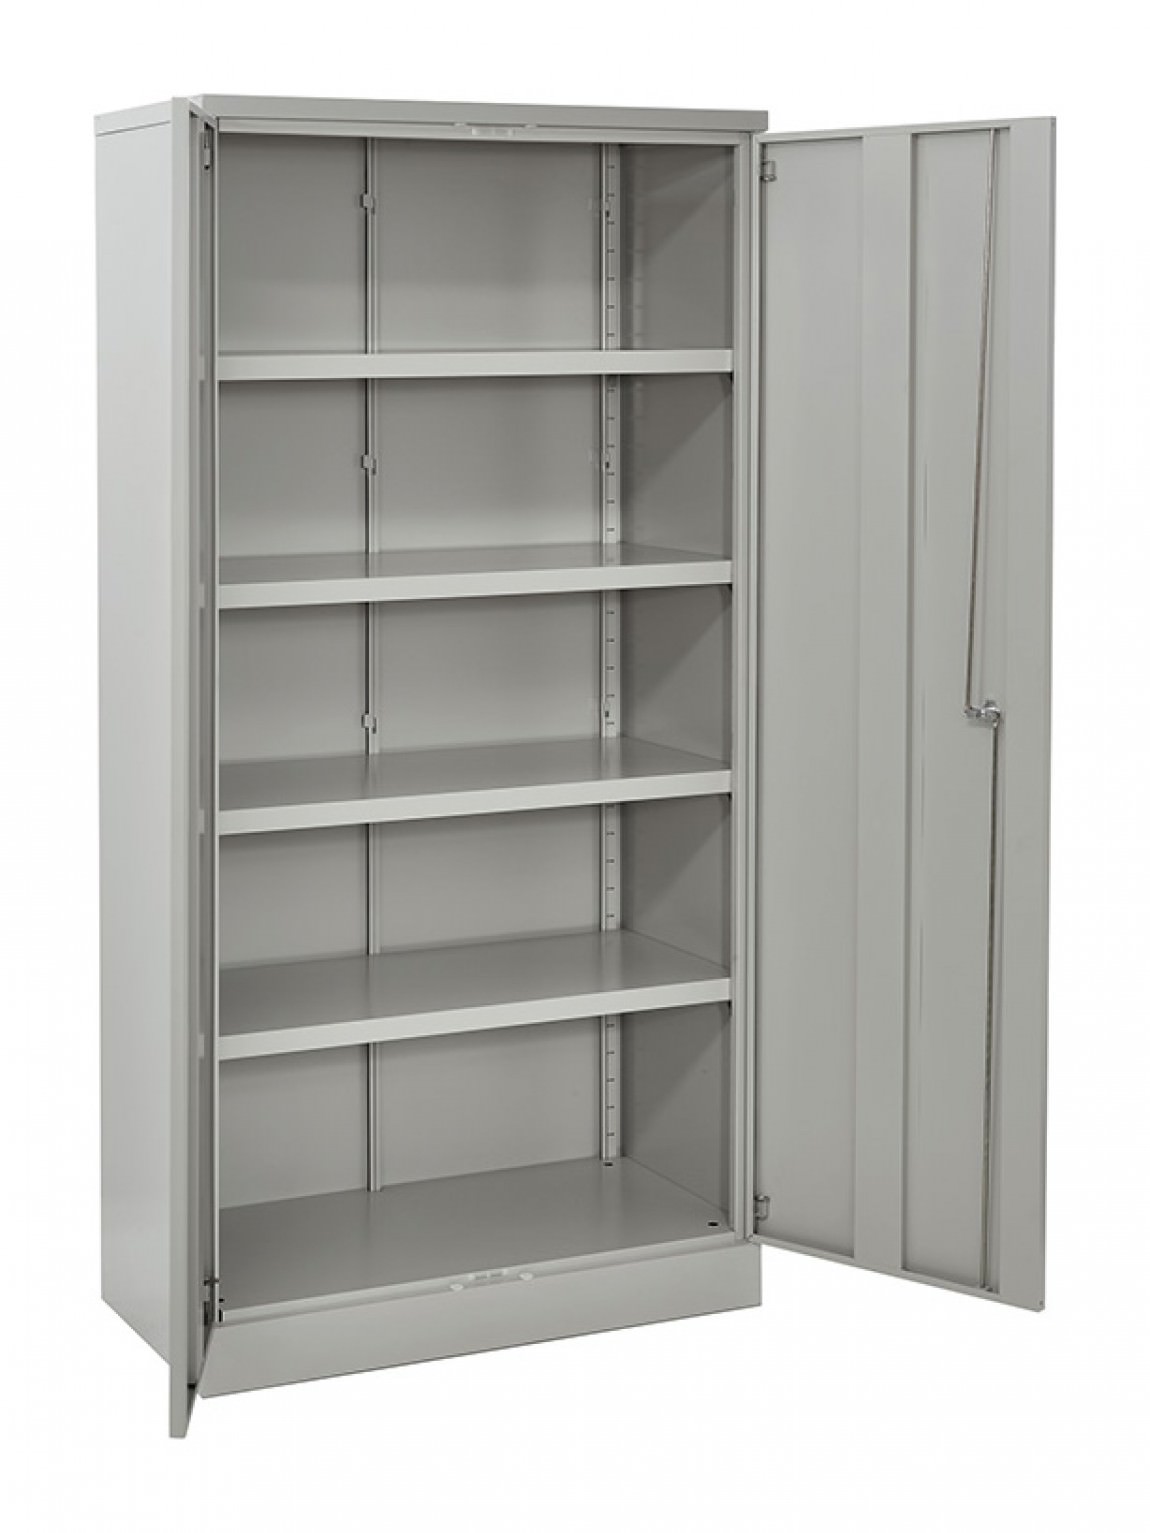 https://madisonliquidators.com/images/p/1150/24706-storage-cabinet-with-4-adjustable-shelves-3.jpg